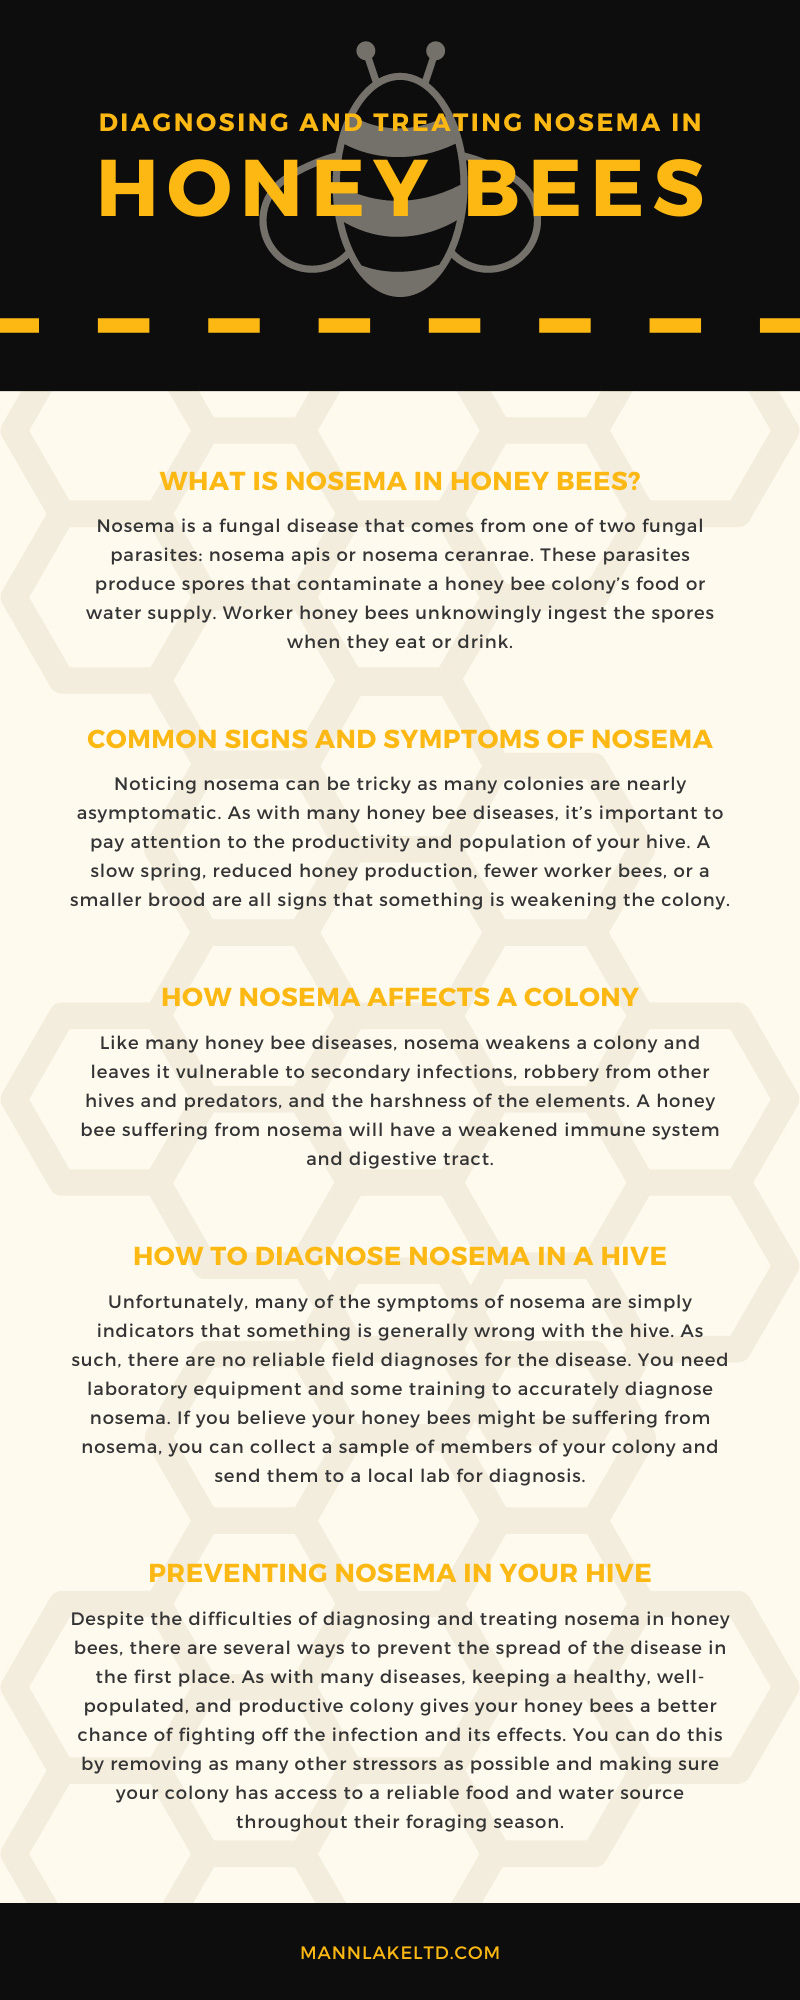 Diagnosing And Treating Nosema In Honey Bees, Mann Lake